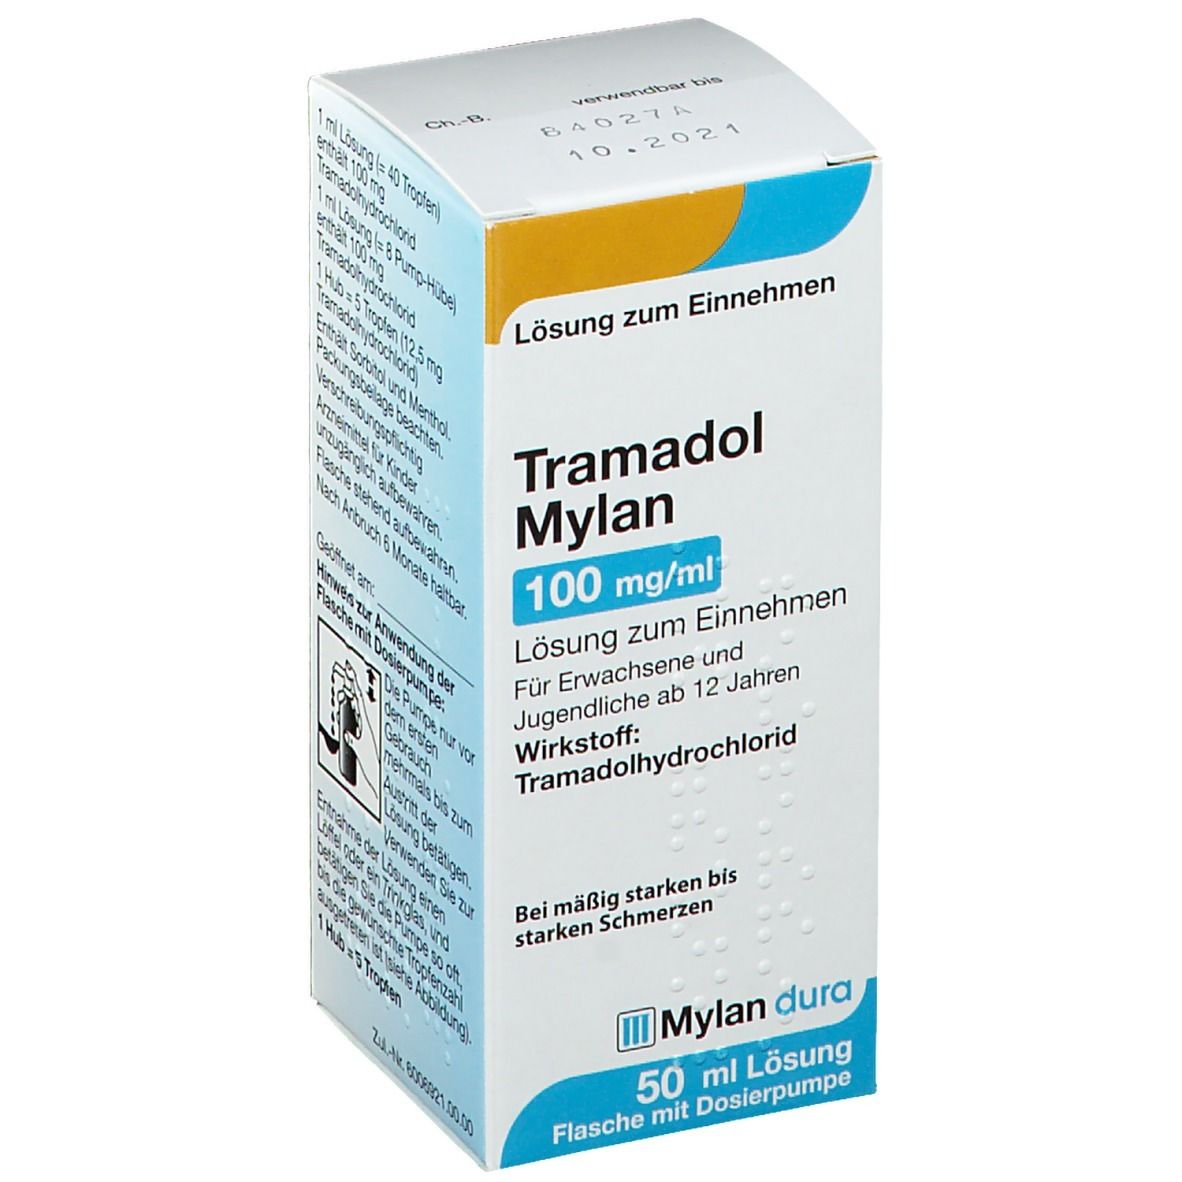 Tramadol Mylan 100 mg/ml